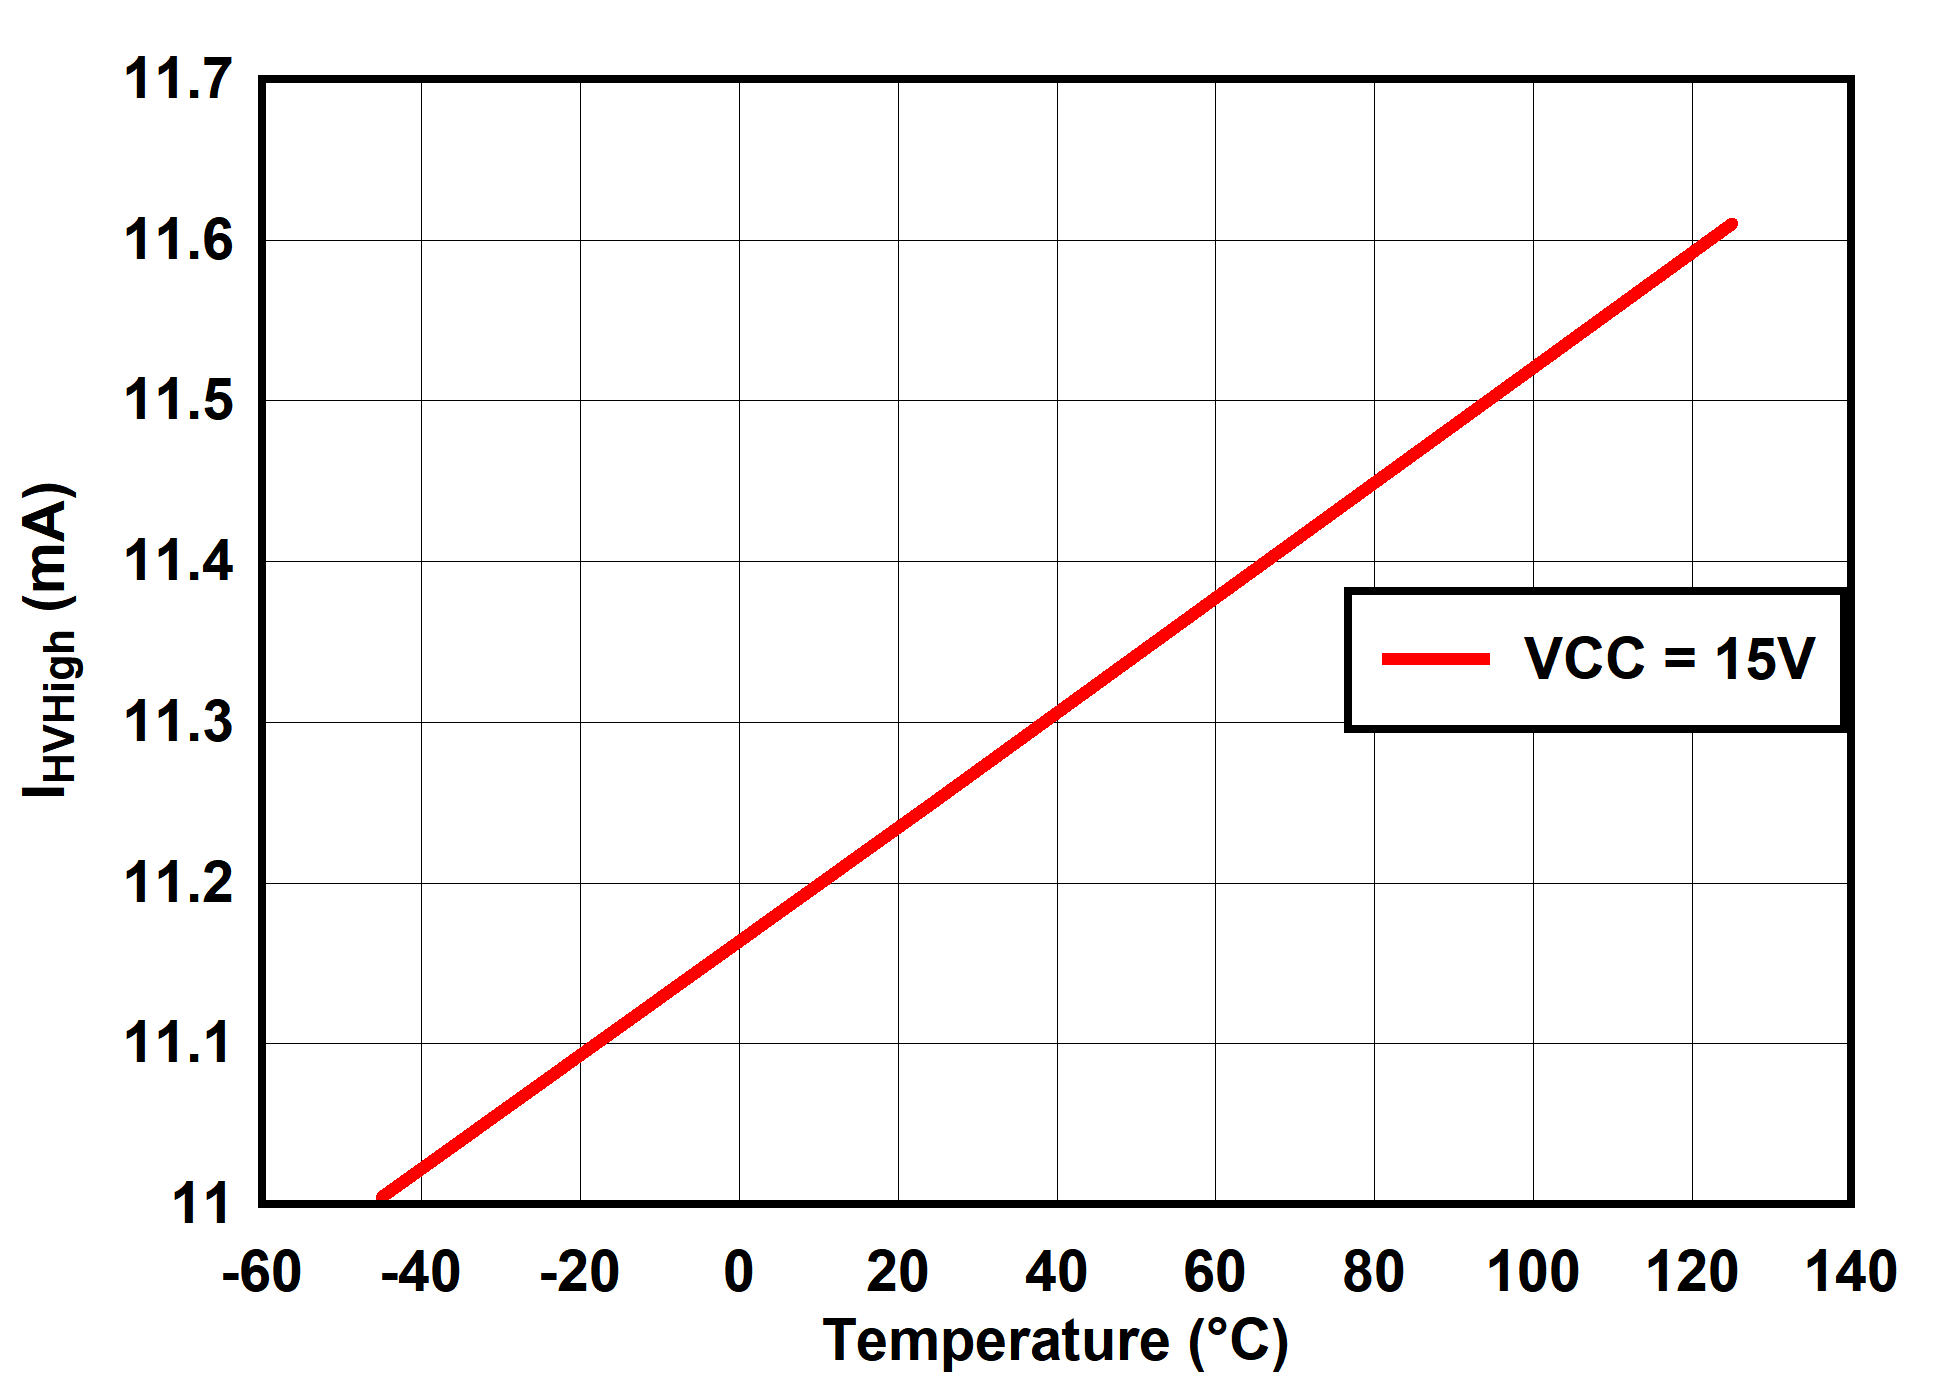 UCC25660 IHVHigh vs Temperature